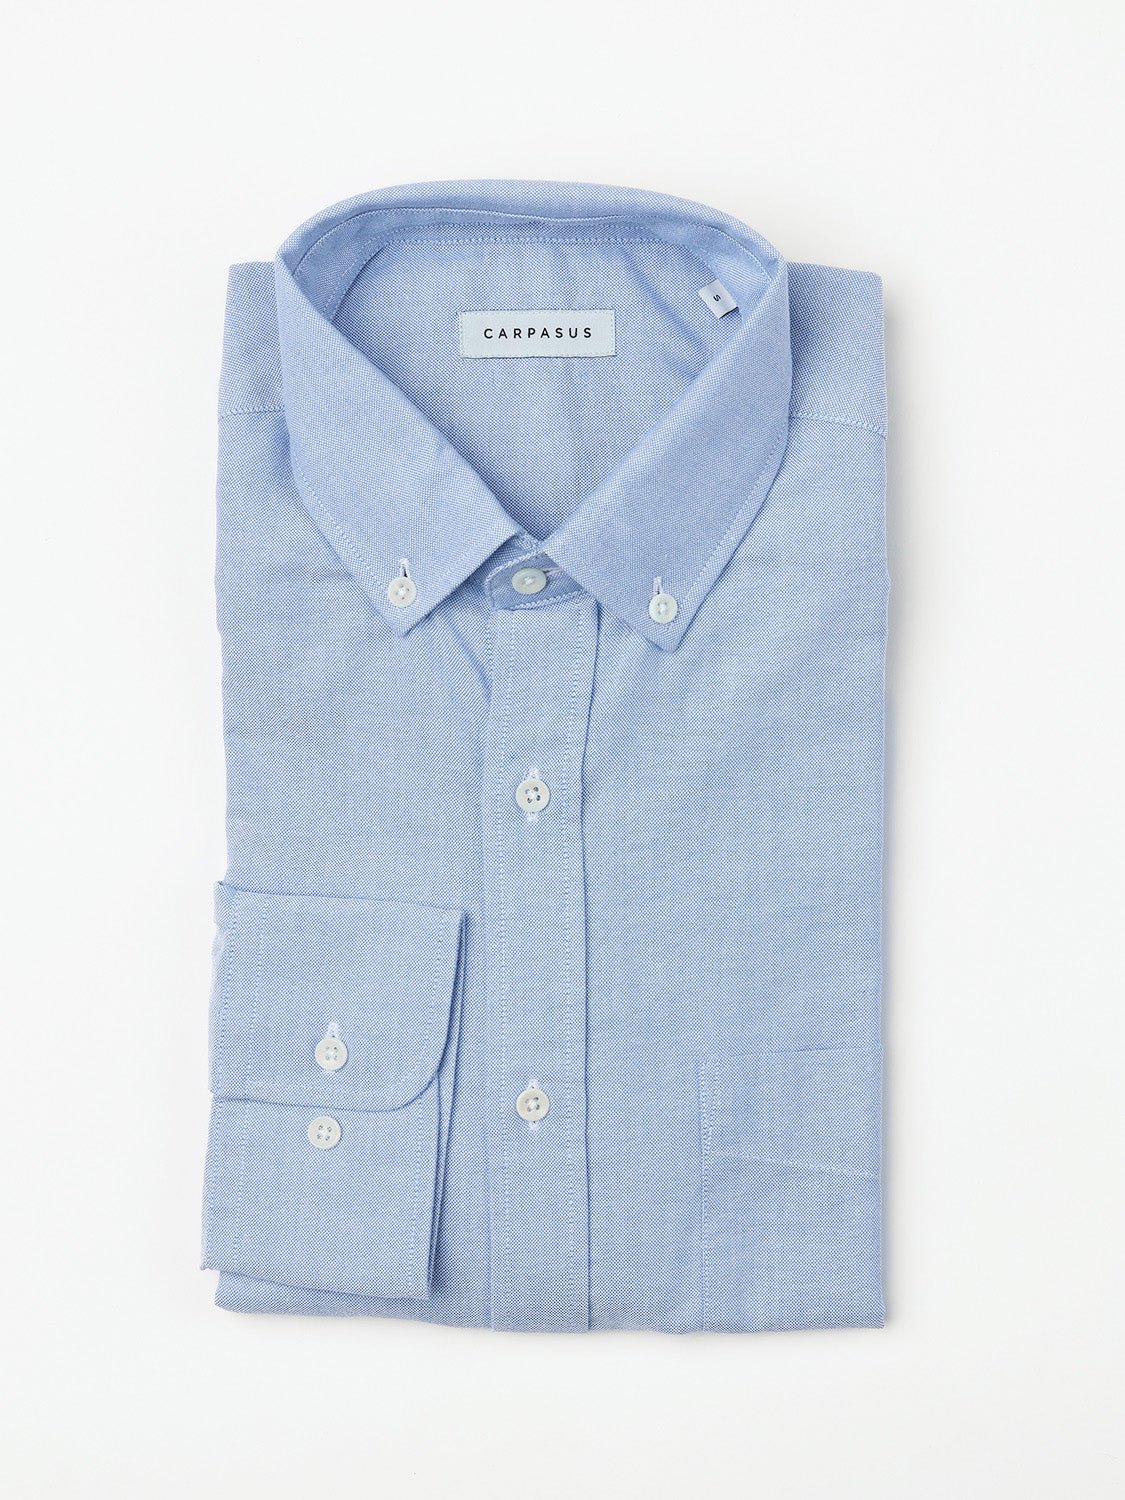 carpasus sustainable organic cotton oxford shirt blue. Nachhaltiges Carpasus Oxford Hemd aus Bio Baumwolle in Blau